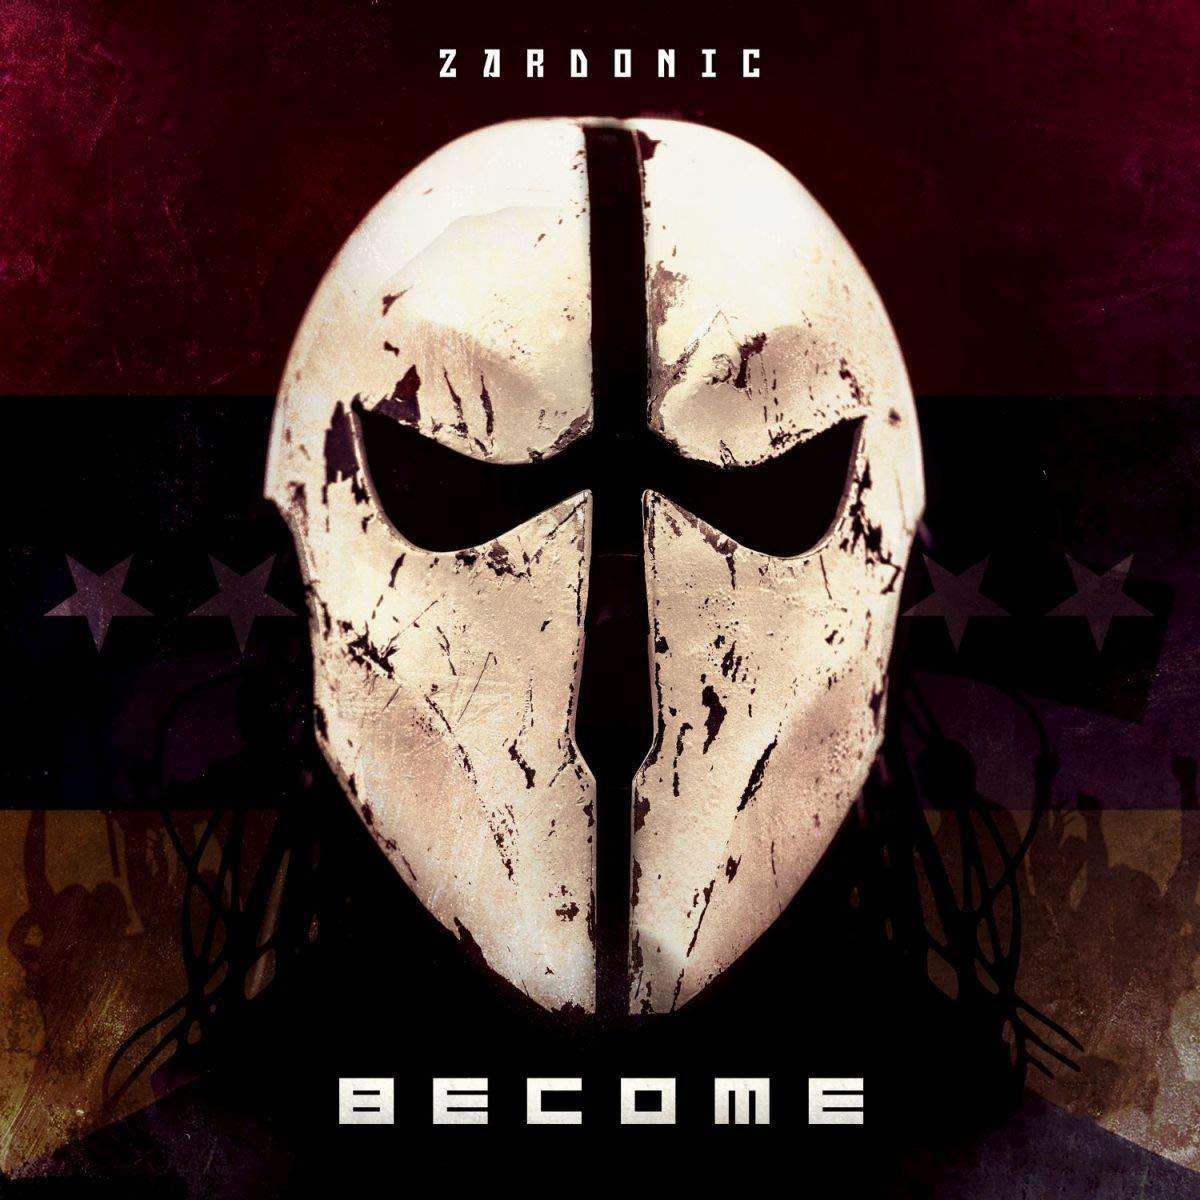 Zardonic (Vinyl) - - Become